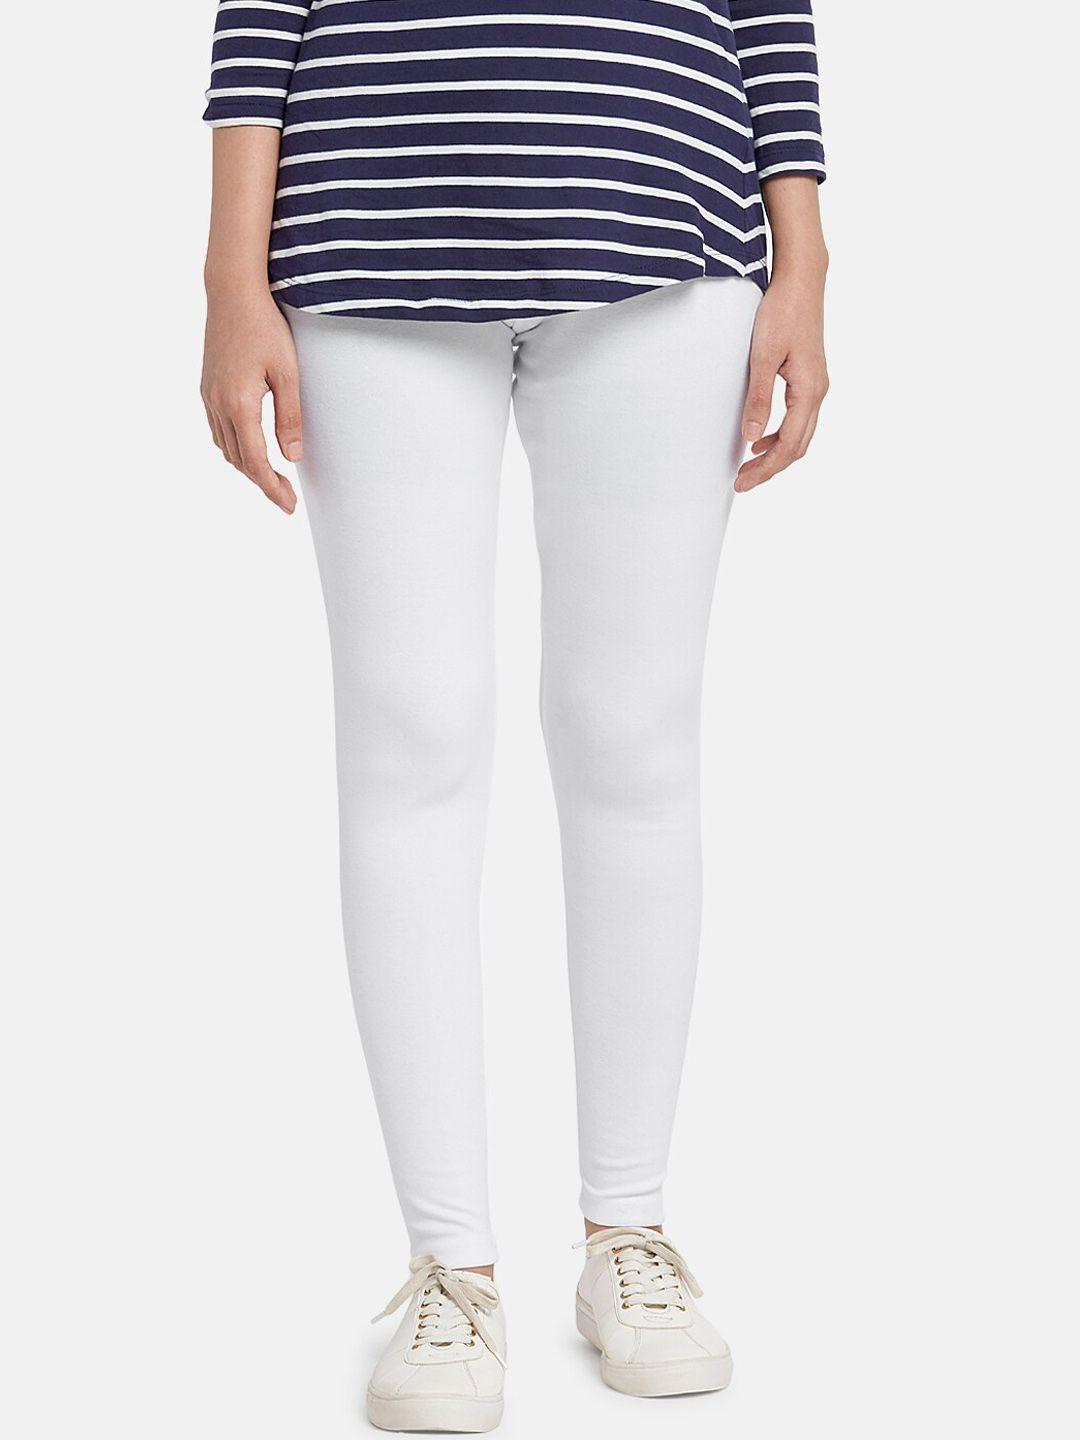 go-colors-women-white-solid-slim-fit-ankle-length-leggings